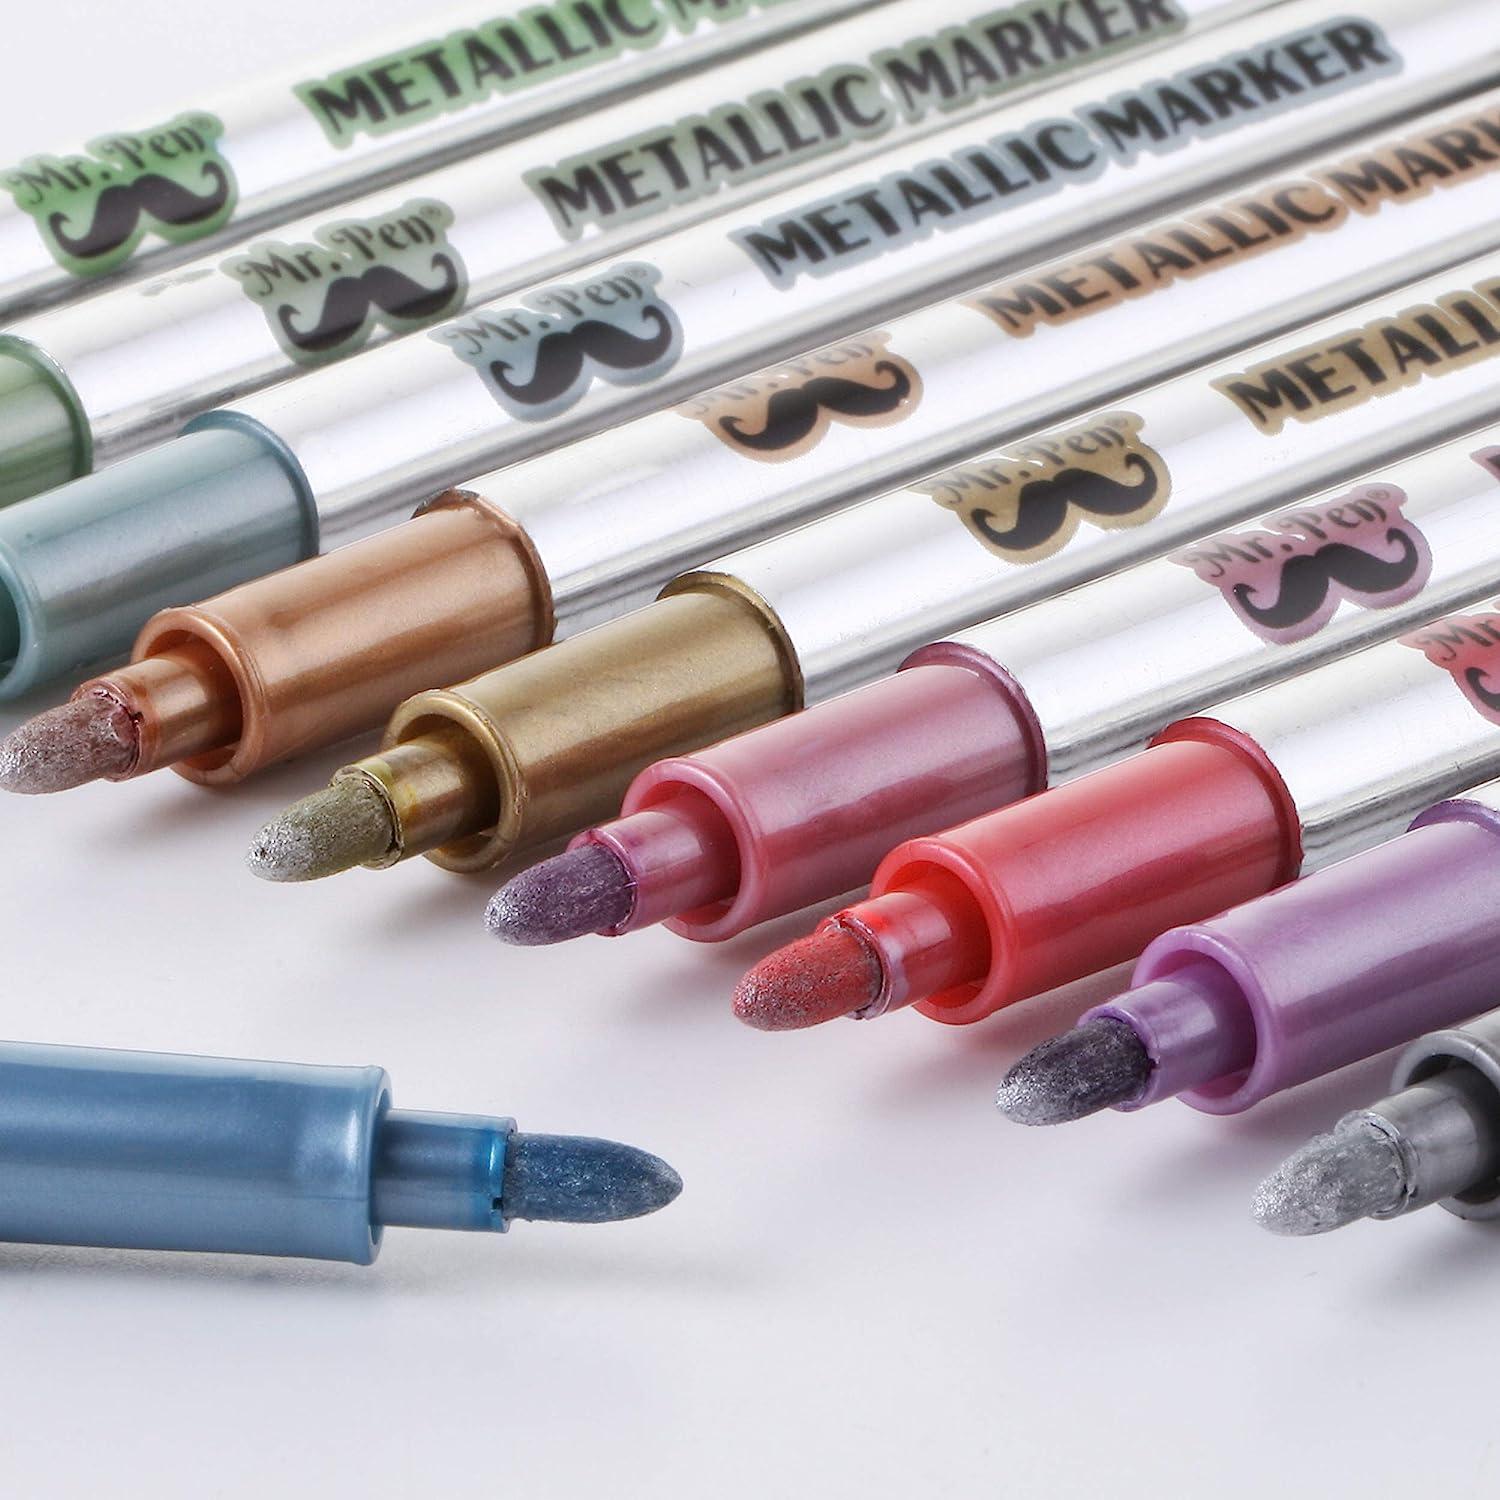 Mr. Pen- Metallic Paint Markers,10 Colors, Metallic Markers for Black Paper, Rock Painting, Card Making, Ceramics, Metal, Glass, DIY Photo Album, Scra